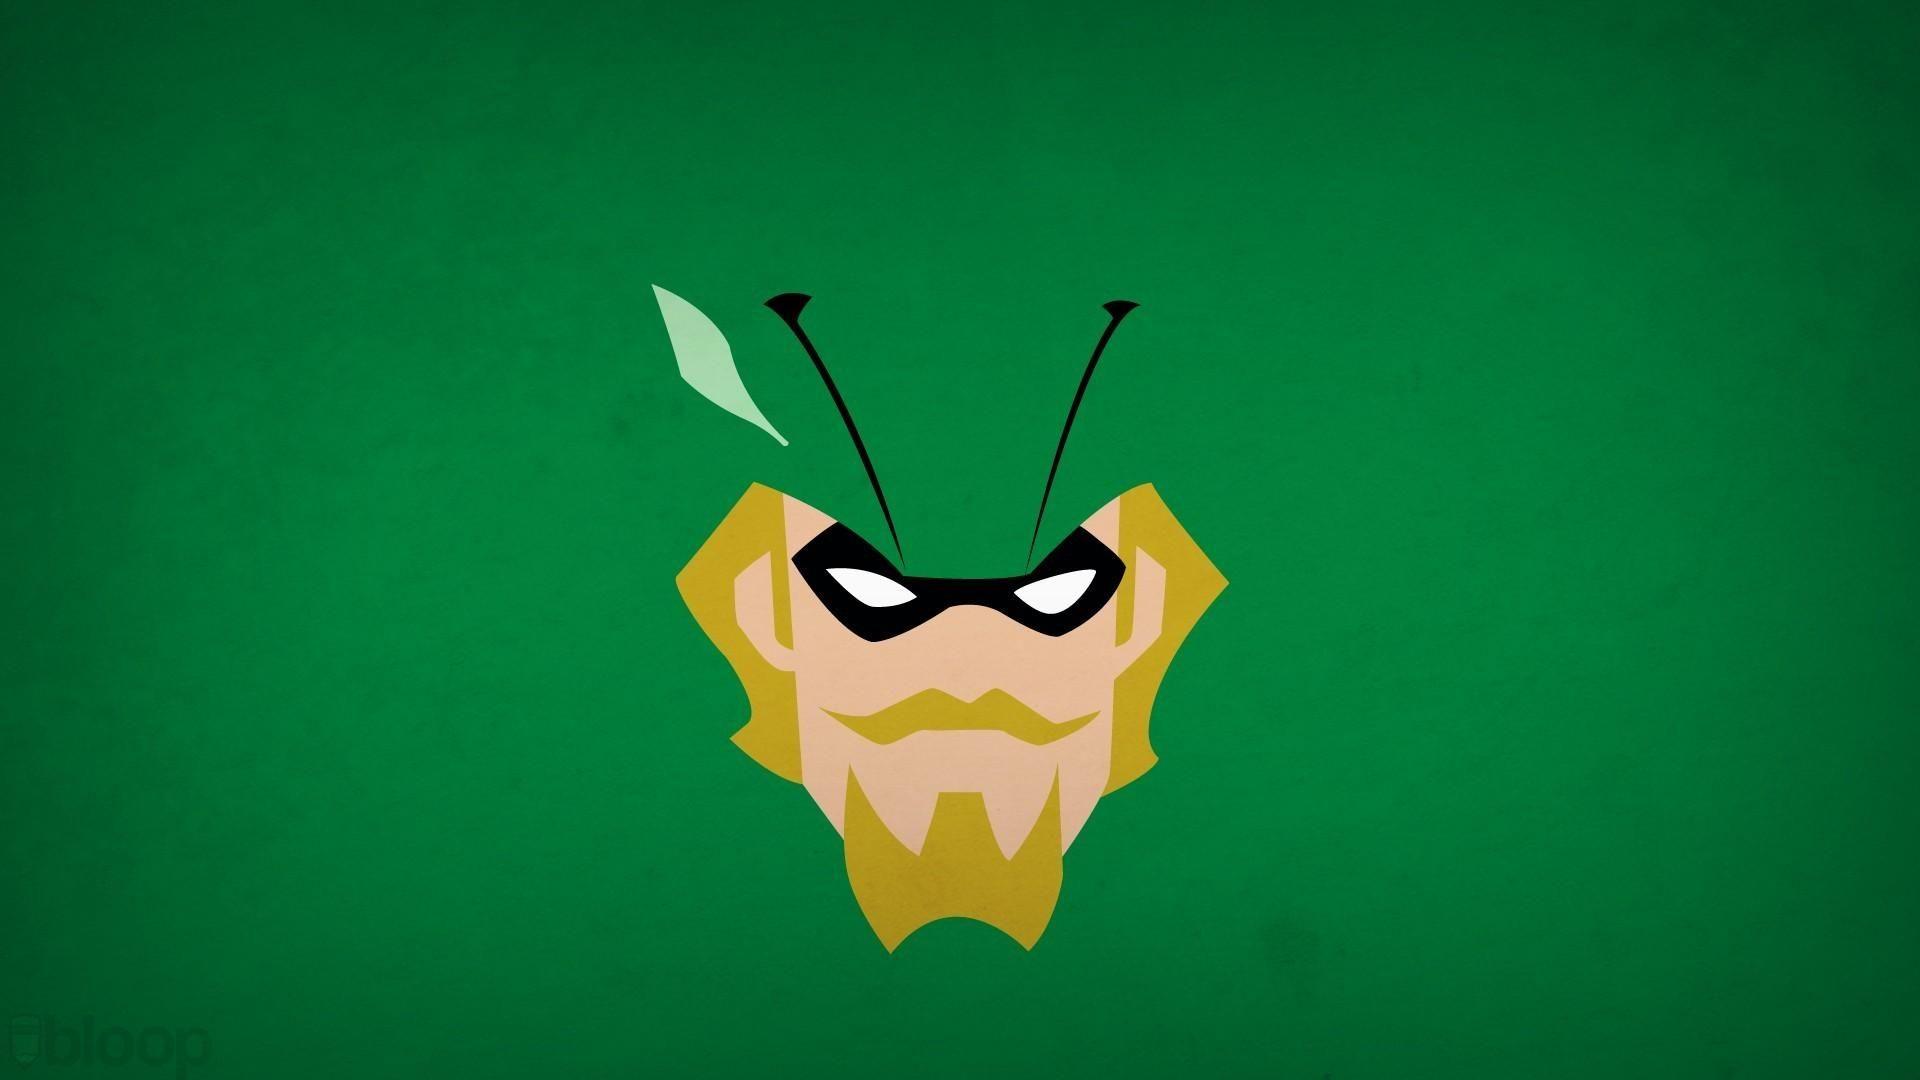 Minimalistic heroes justice league green arrow background blo0p